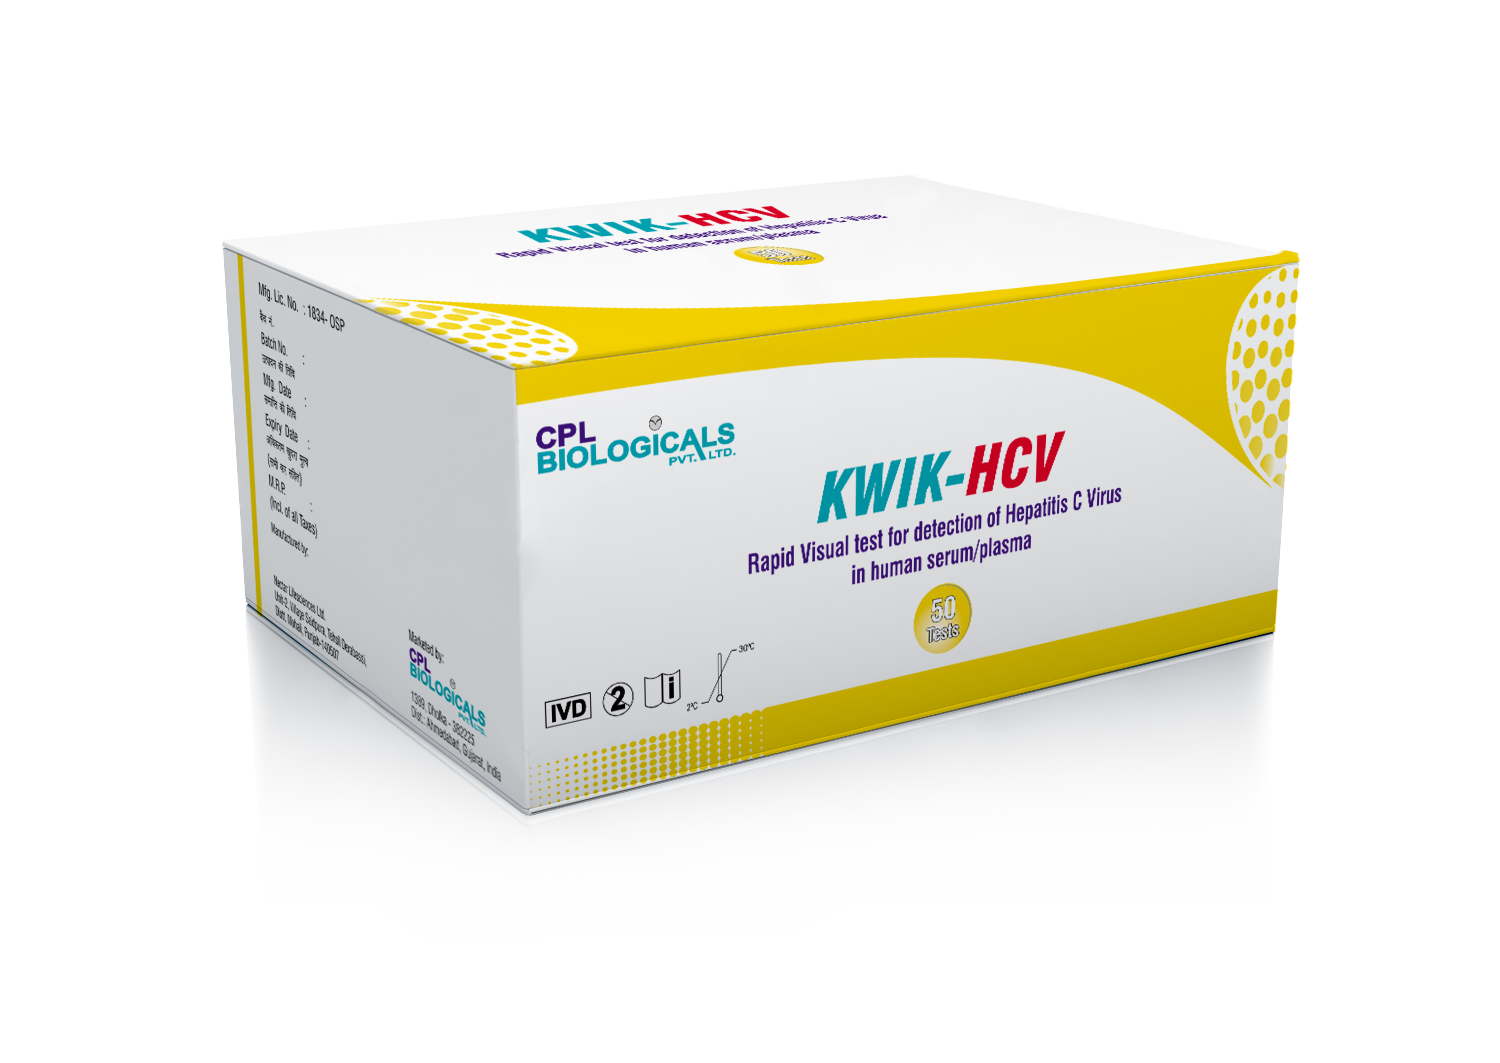 KWIK-HCV